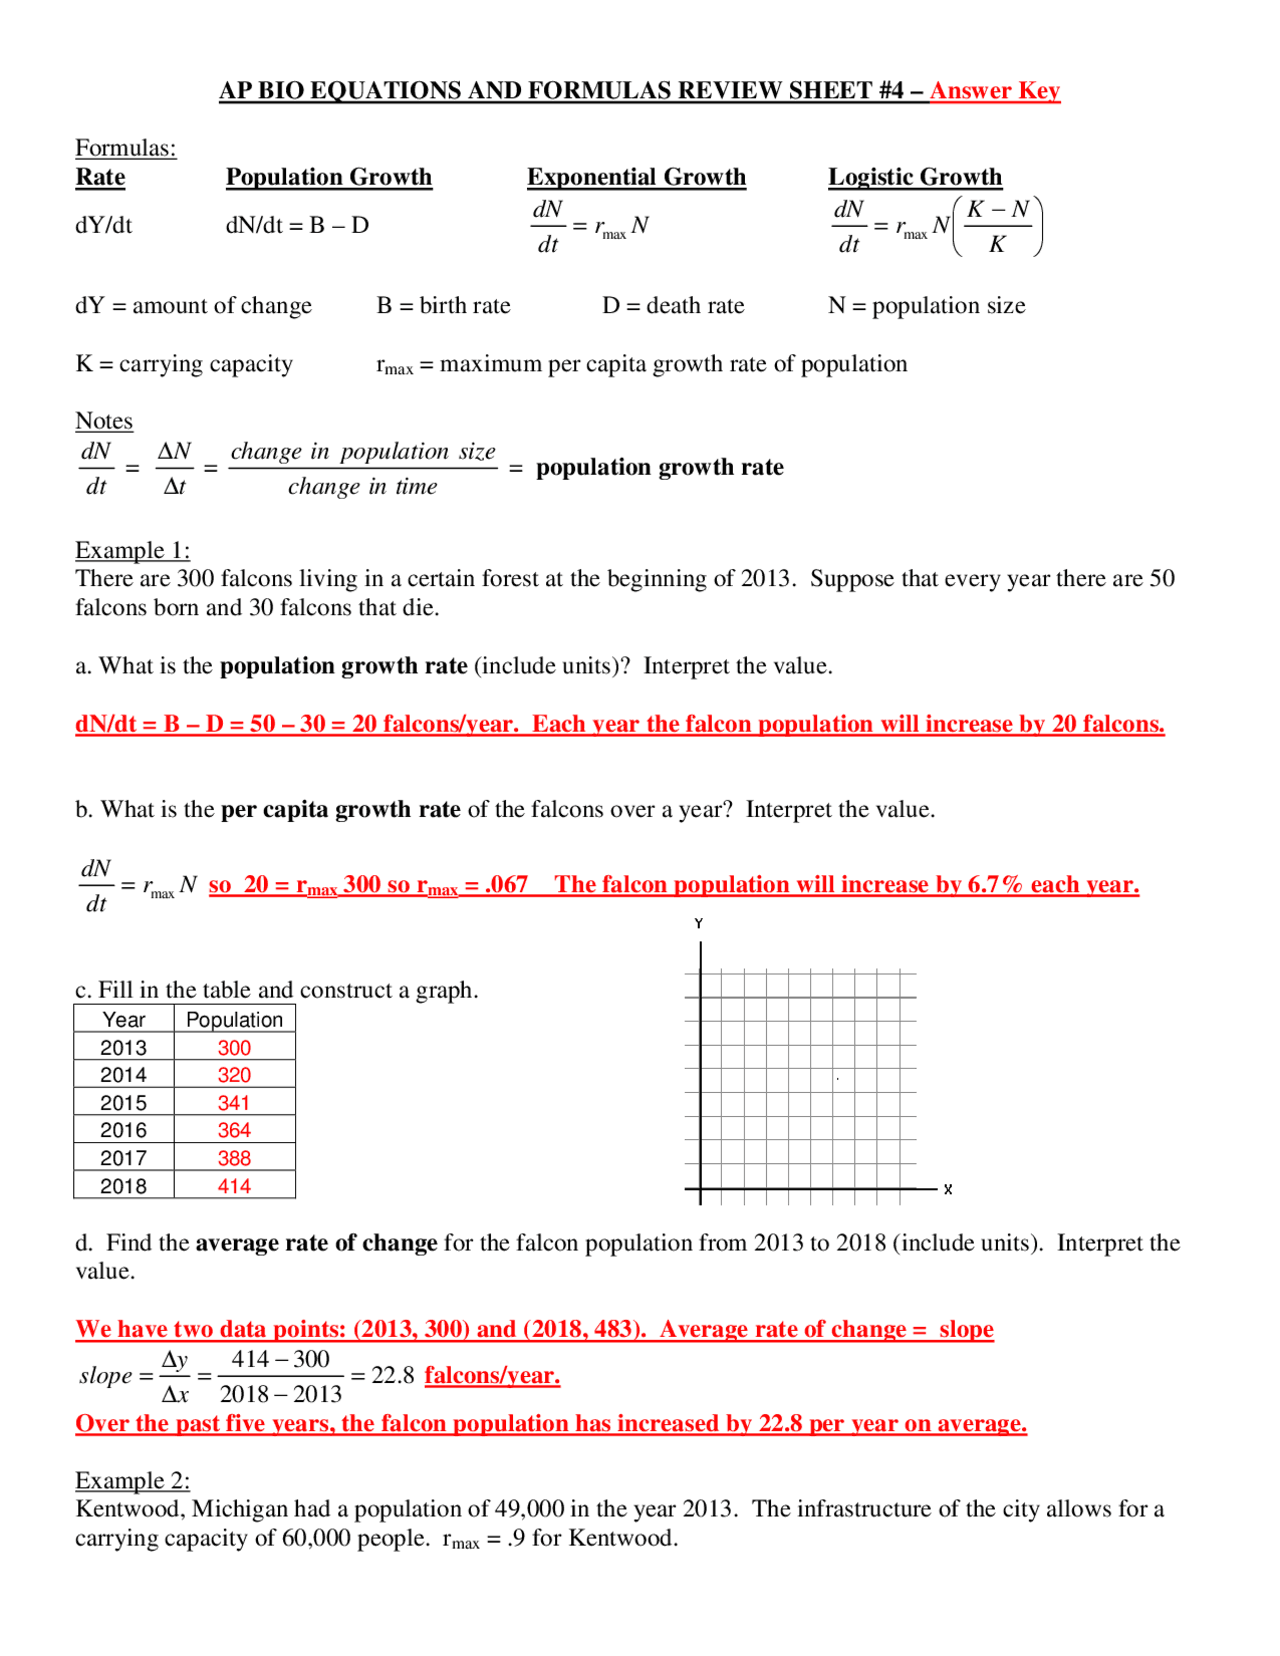 ap-bio-equations-and-formulas-review-sheet-cheat-sheet-biology-docsity-math-worksheet-answers